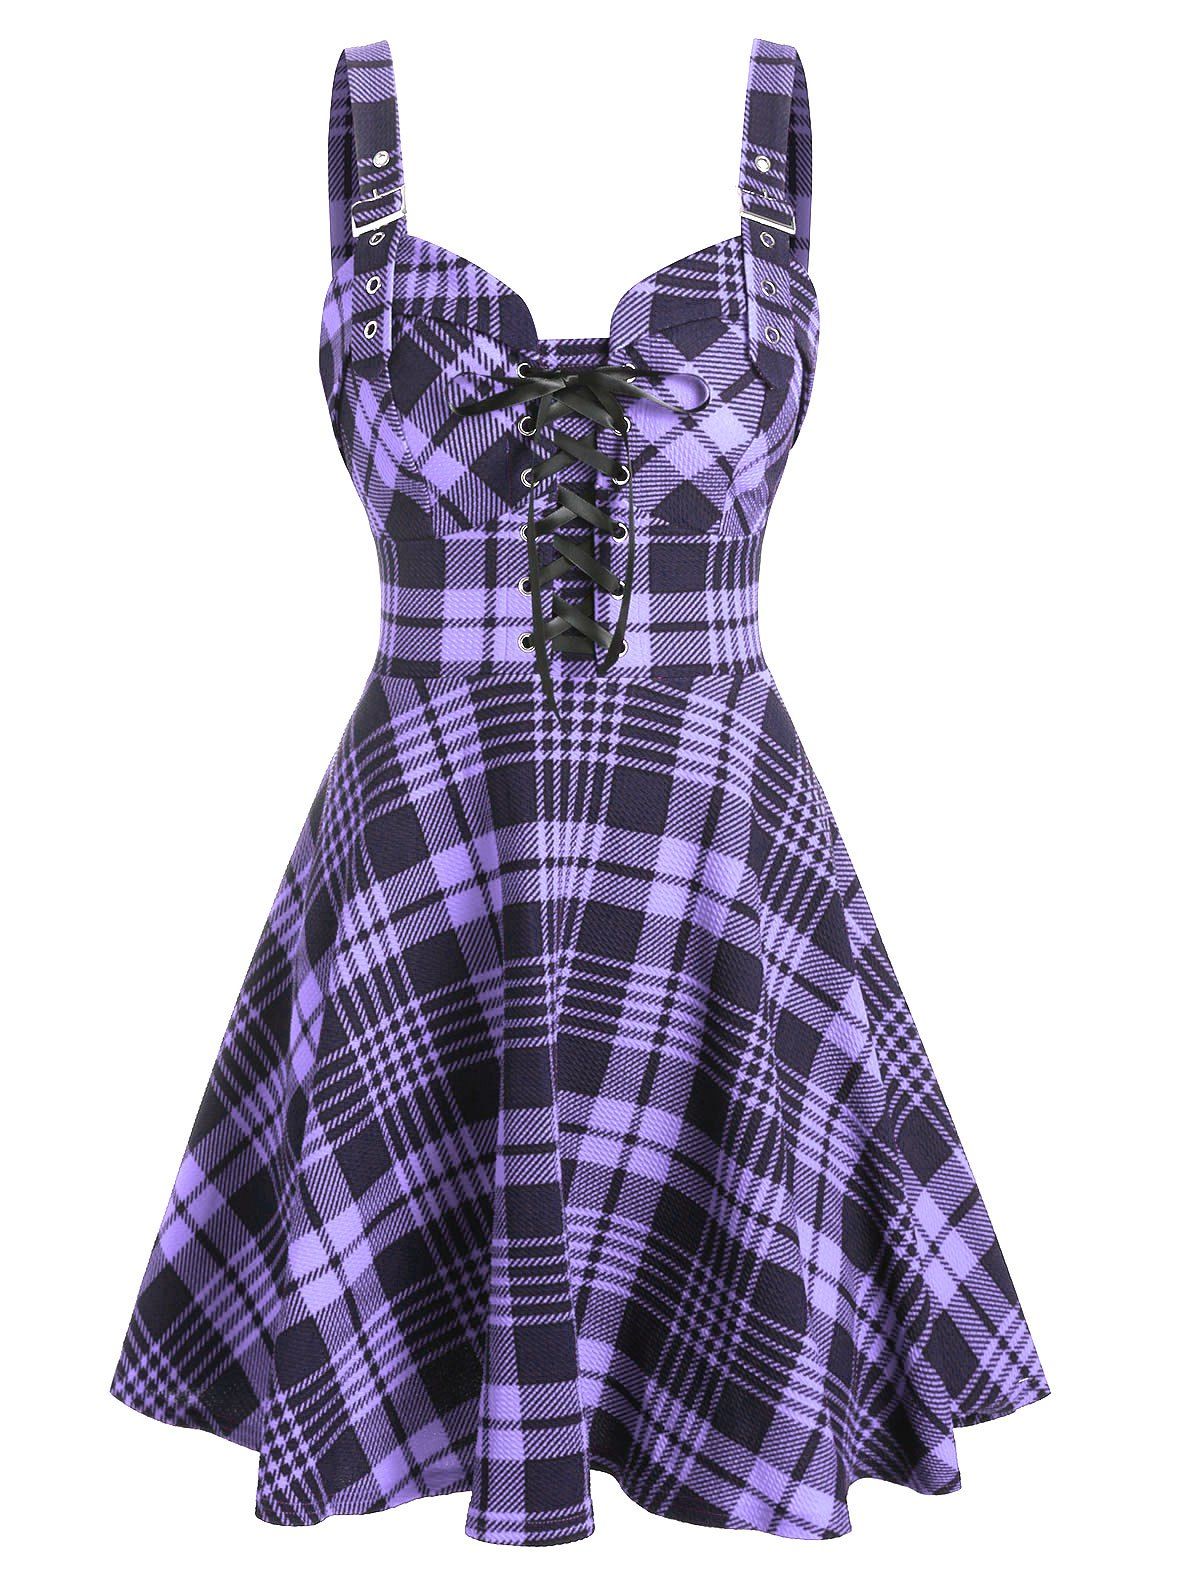 Plaid Print Lace-up Buckle Strap Sleeveless Dress - PURPLE XL